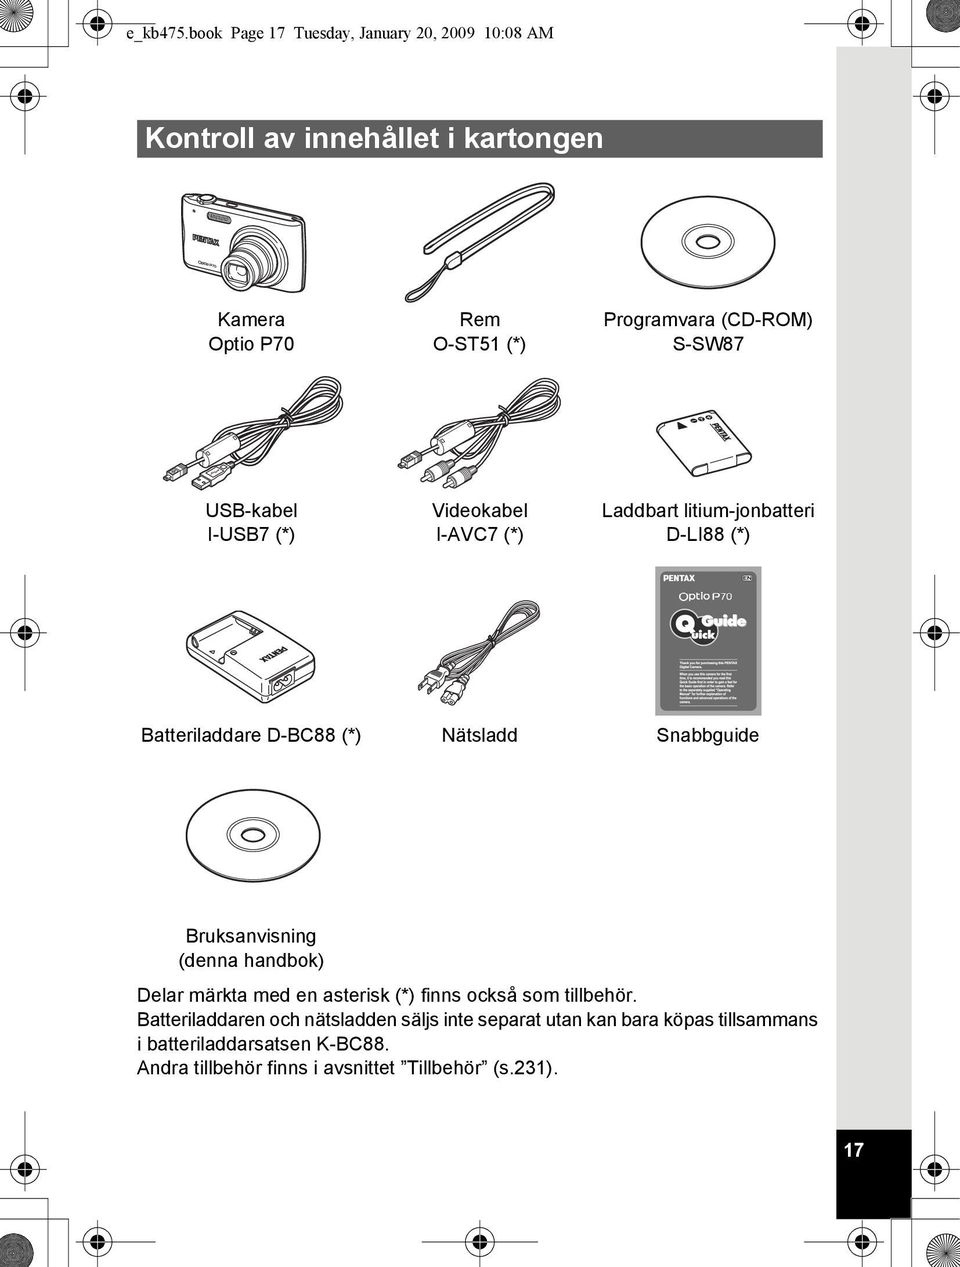 (CD-ROM) S-SW87 USB-kabel I-USB7 (*) Videokabel I-AVC7 (*) Laddbart litium-jonbatteri D-LI88 (*) Batteriladdare D-BC88 (*) Nätsladd